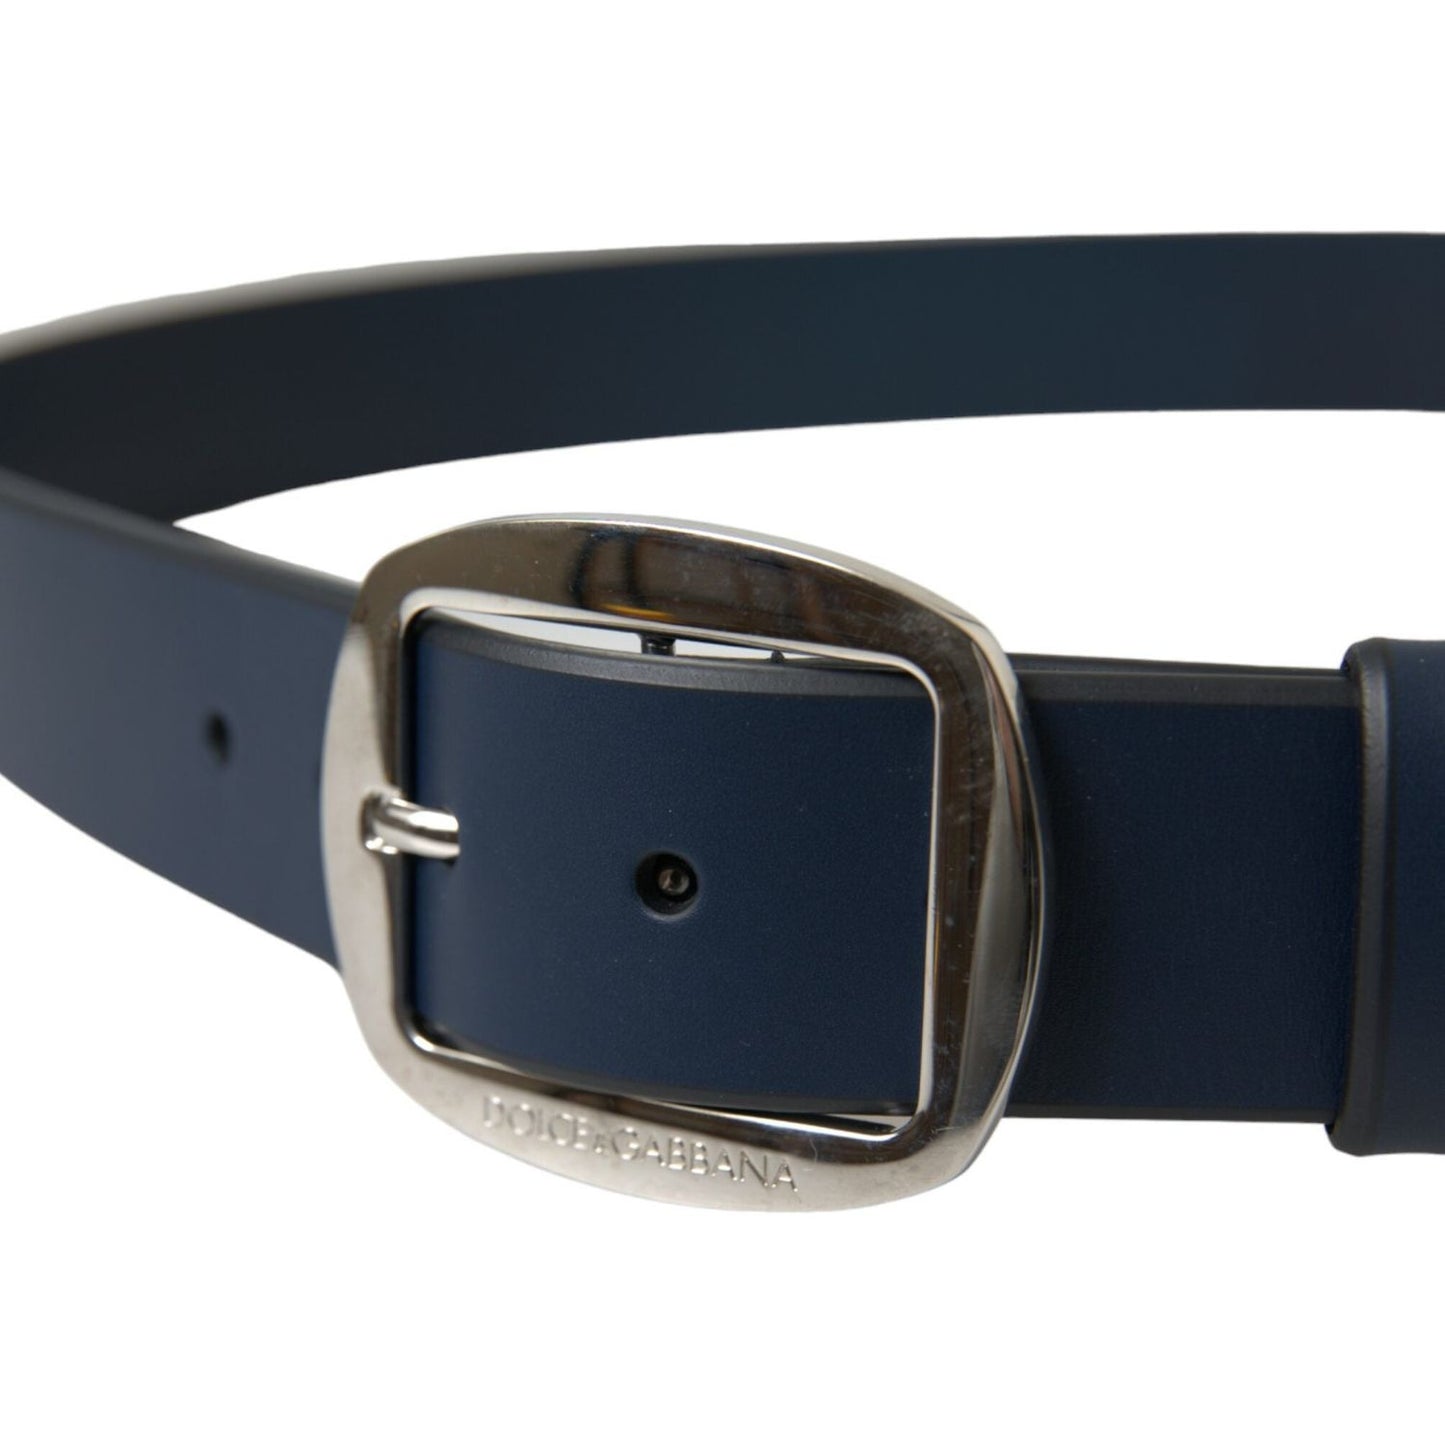 Dolce & Gabbana Elegant Blue Calf Leather Belt with Metal Buckle elegant-blue-calf-leather-belt-with-metal-buckle